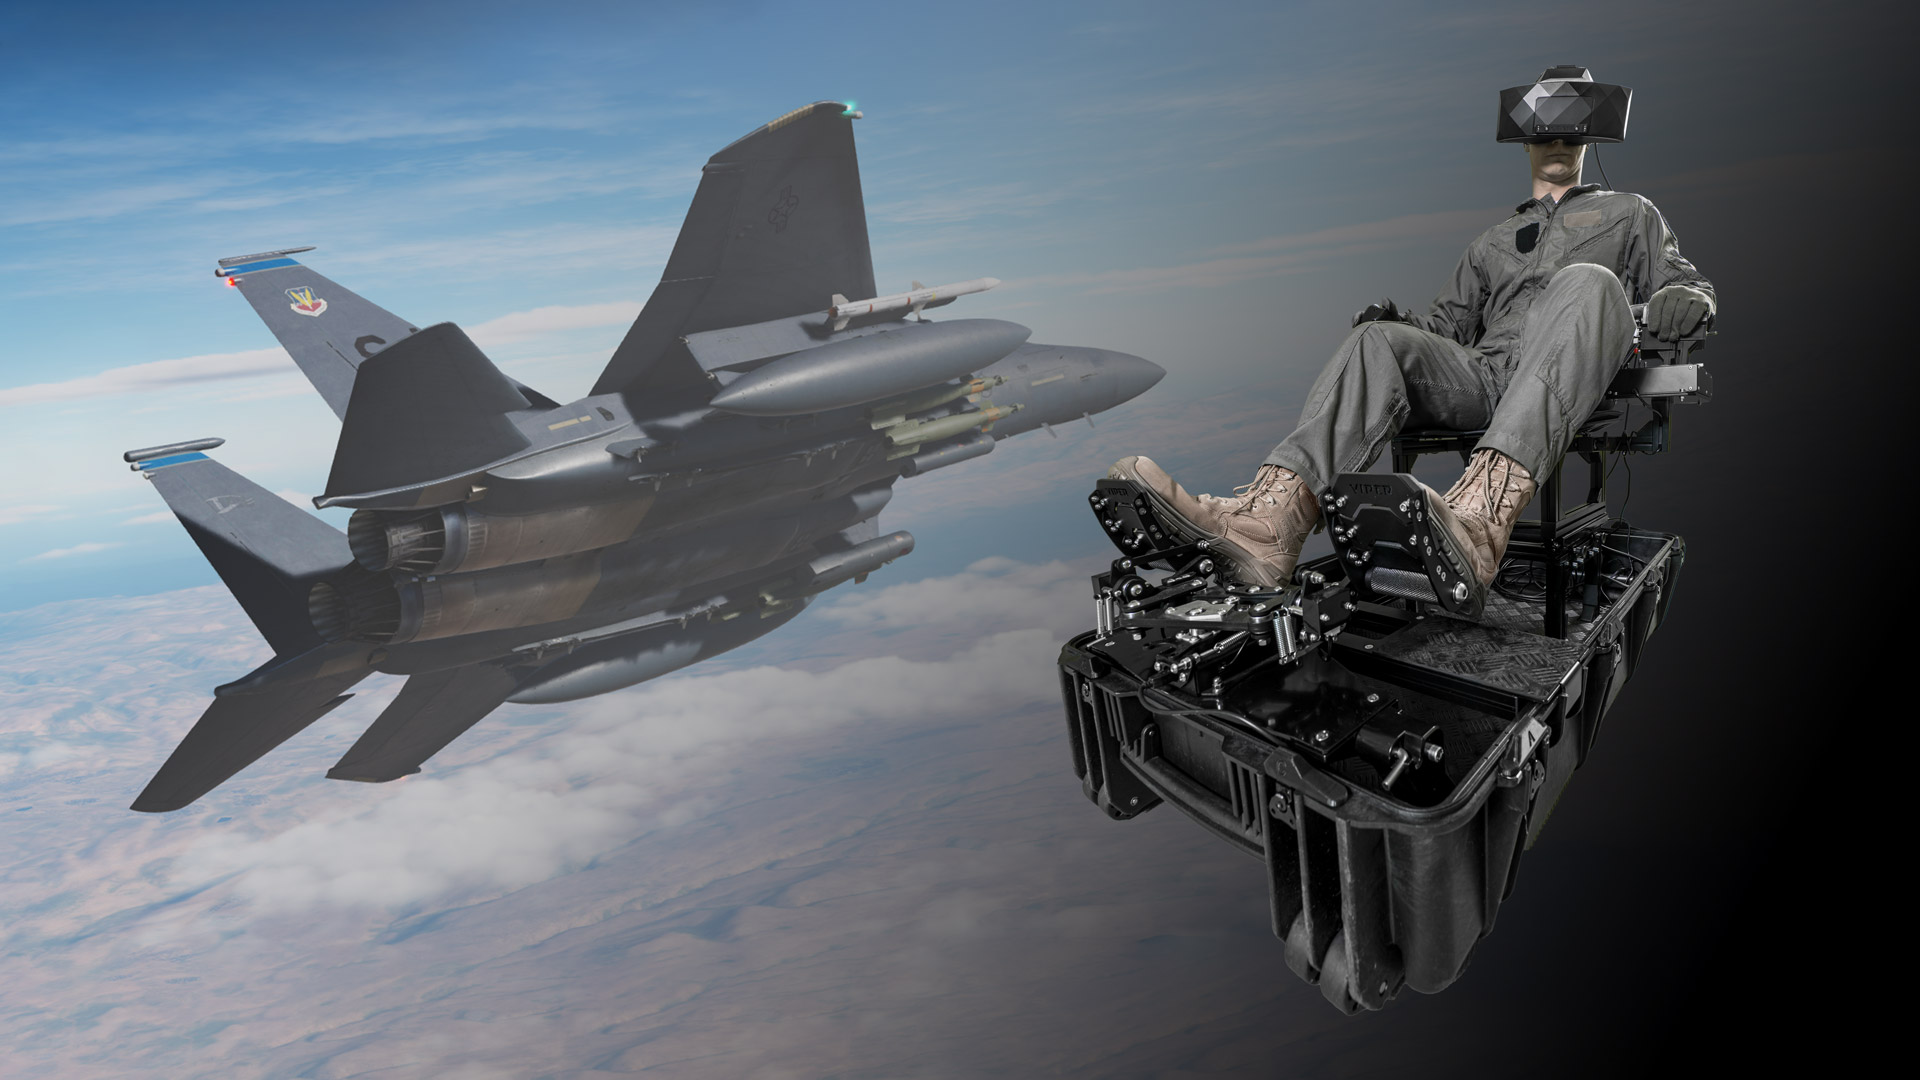 Vrgineers Develops Portable VR Combat Flight Sim Trainer